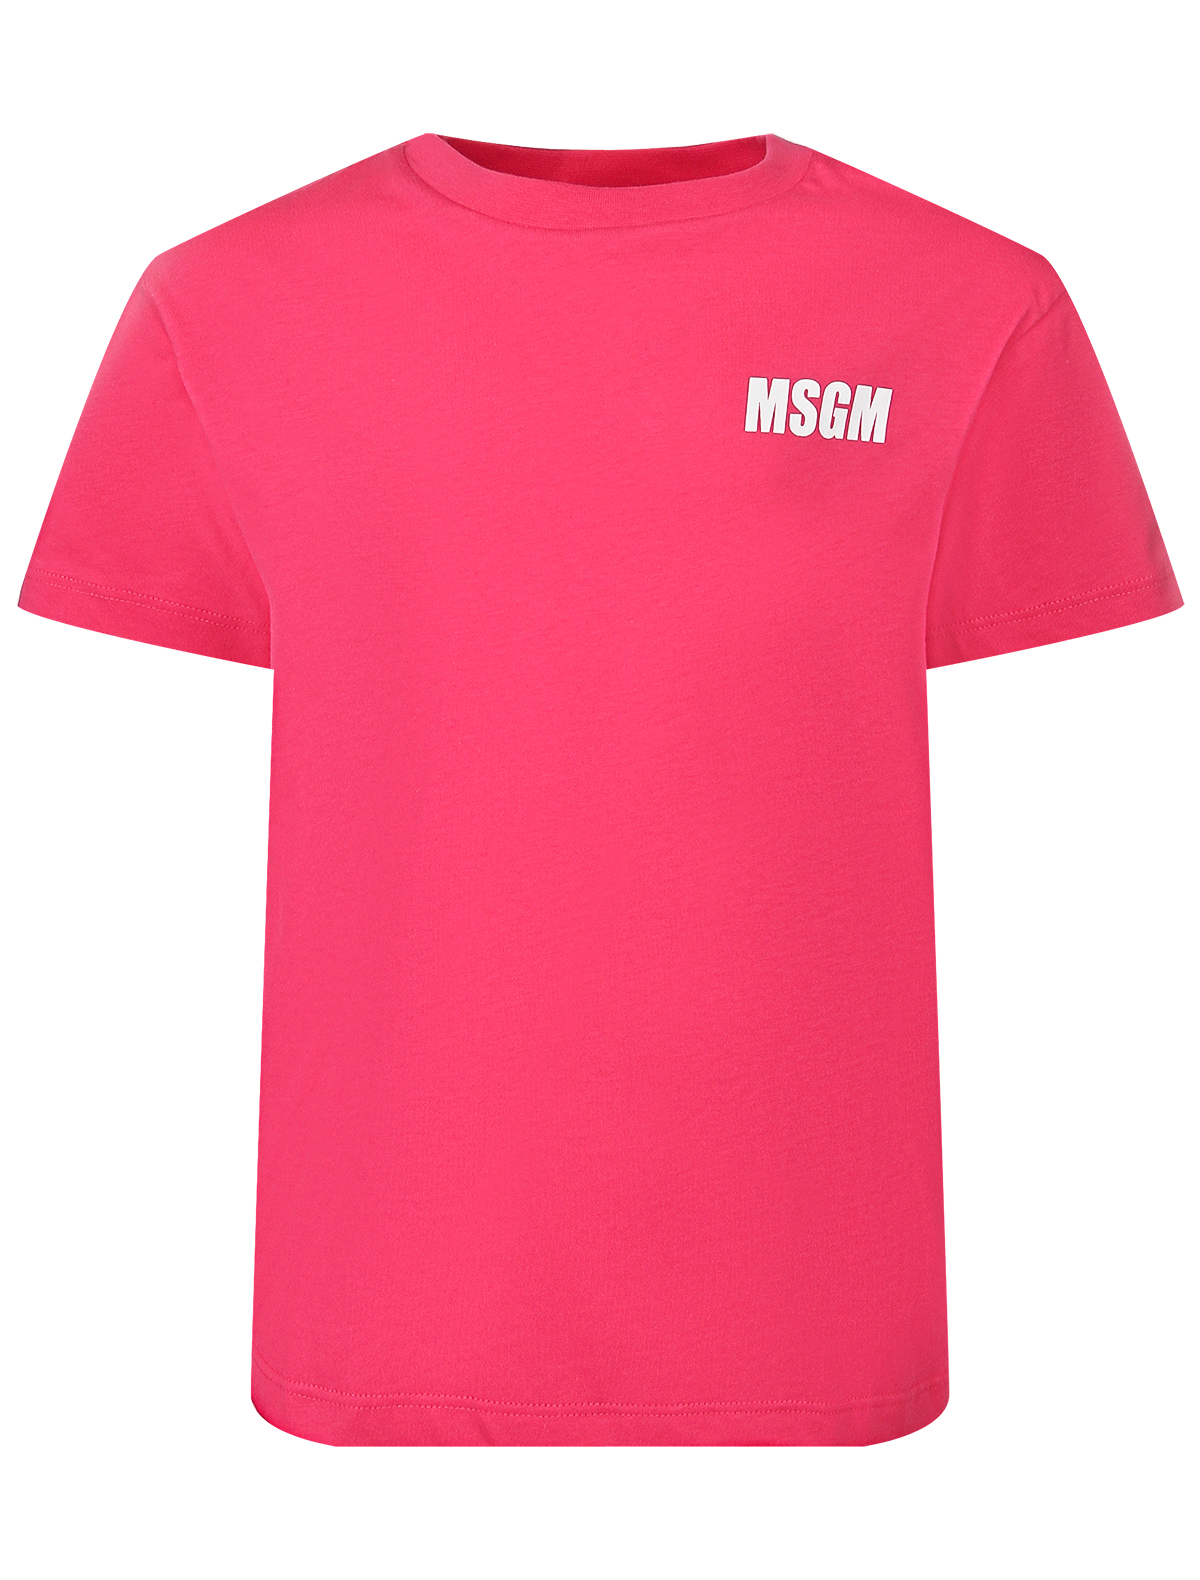 Футболка MSGM 2648562, цвет розовый, размер 13 1134509413203 - фото 1